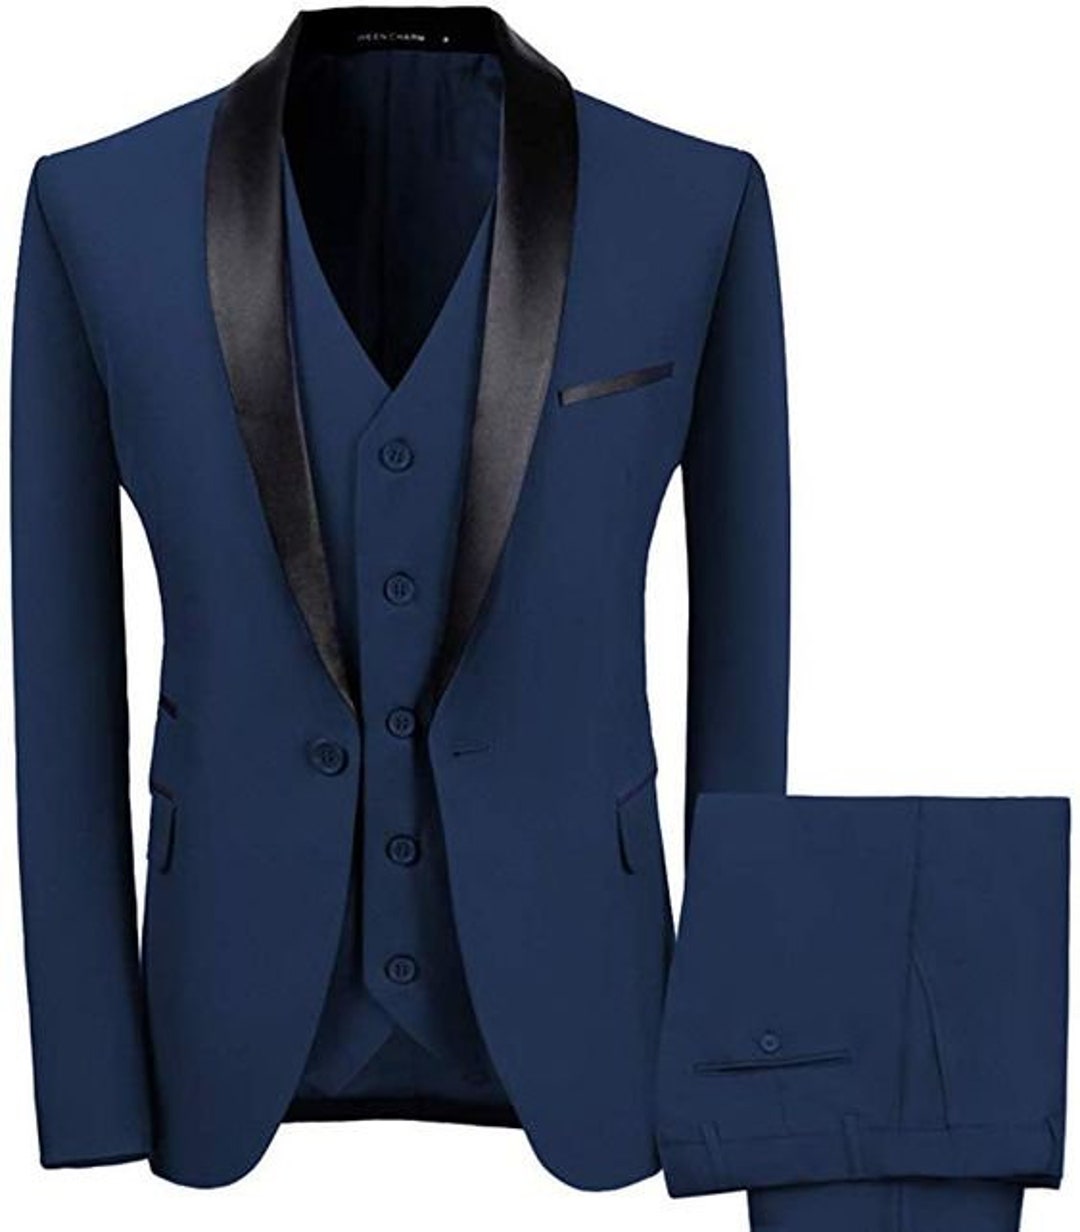 One-Chest Pocket Notch Lapel One-Button Navy Blue Suit